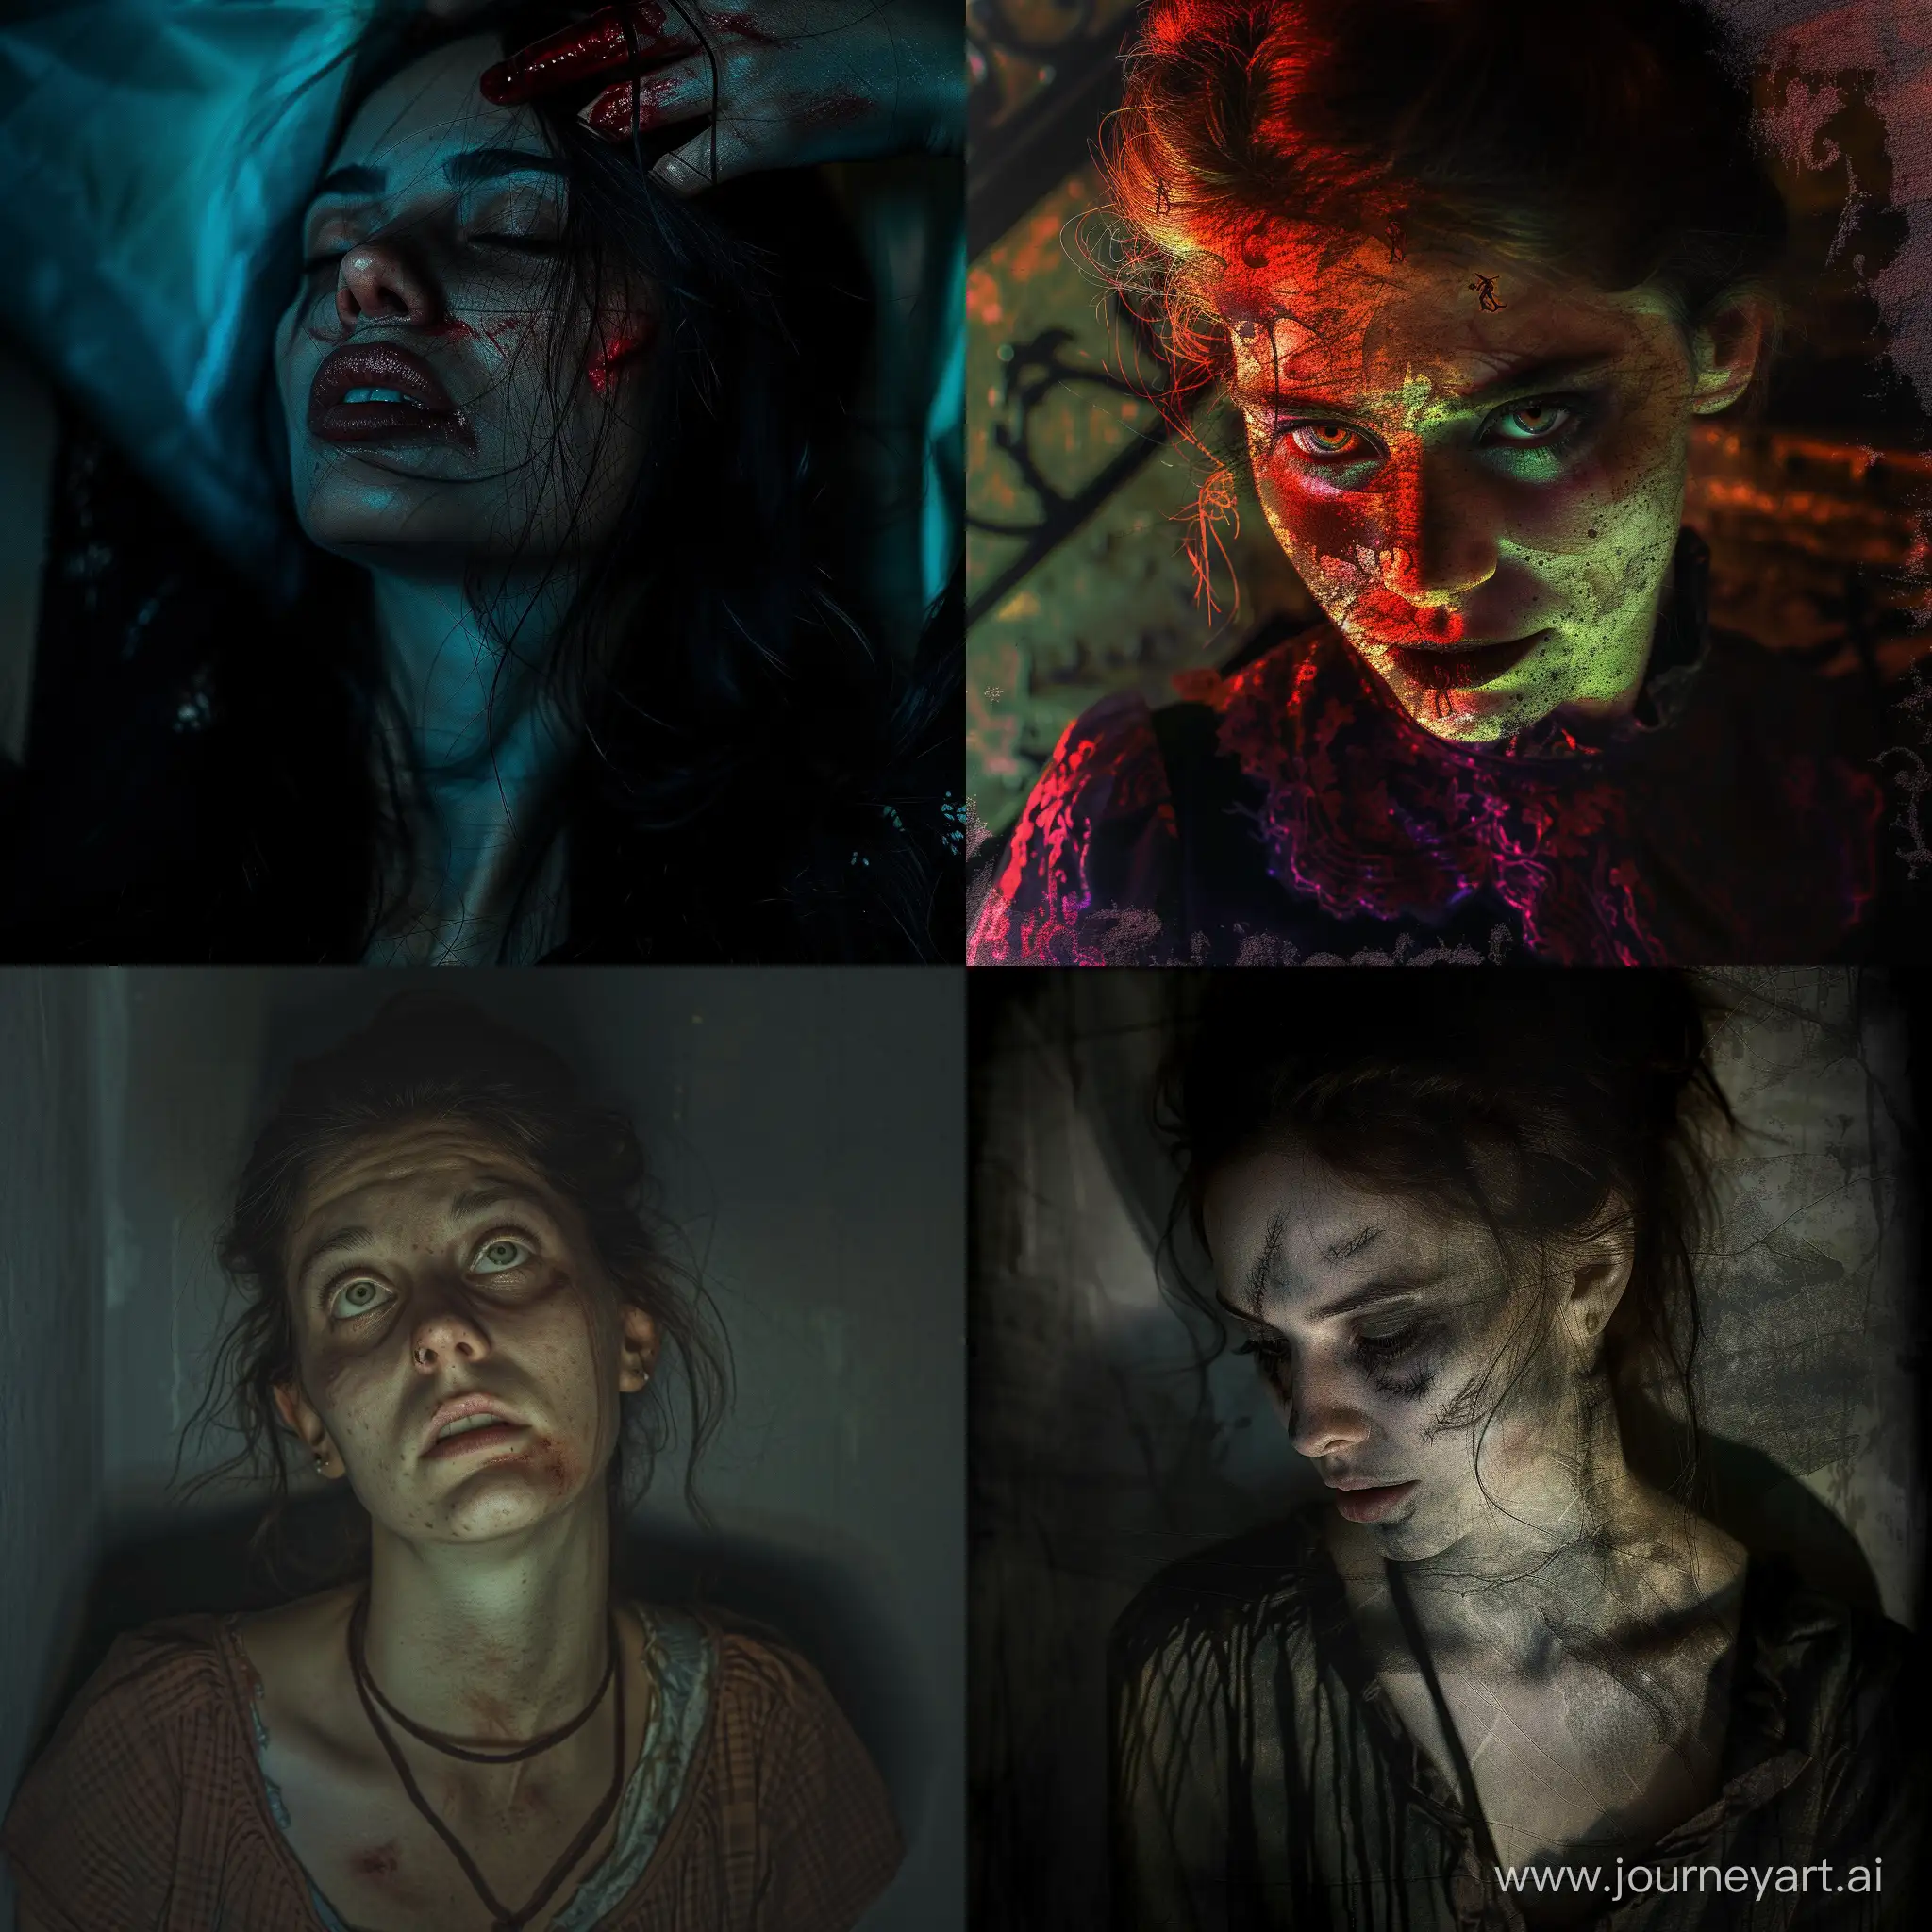 Nightmarish-Woman-Portrait-with-Intense-Lighting-and-Shadow